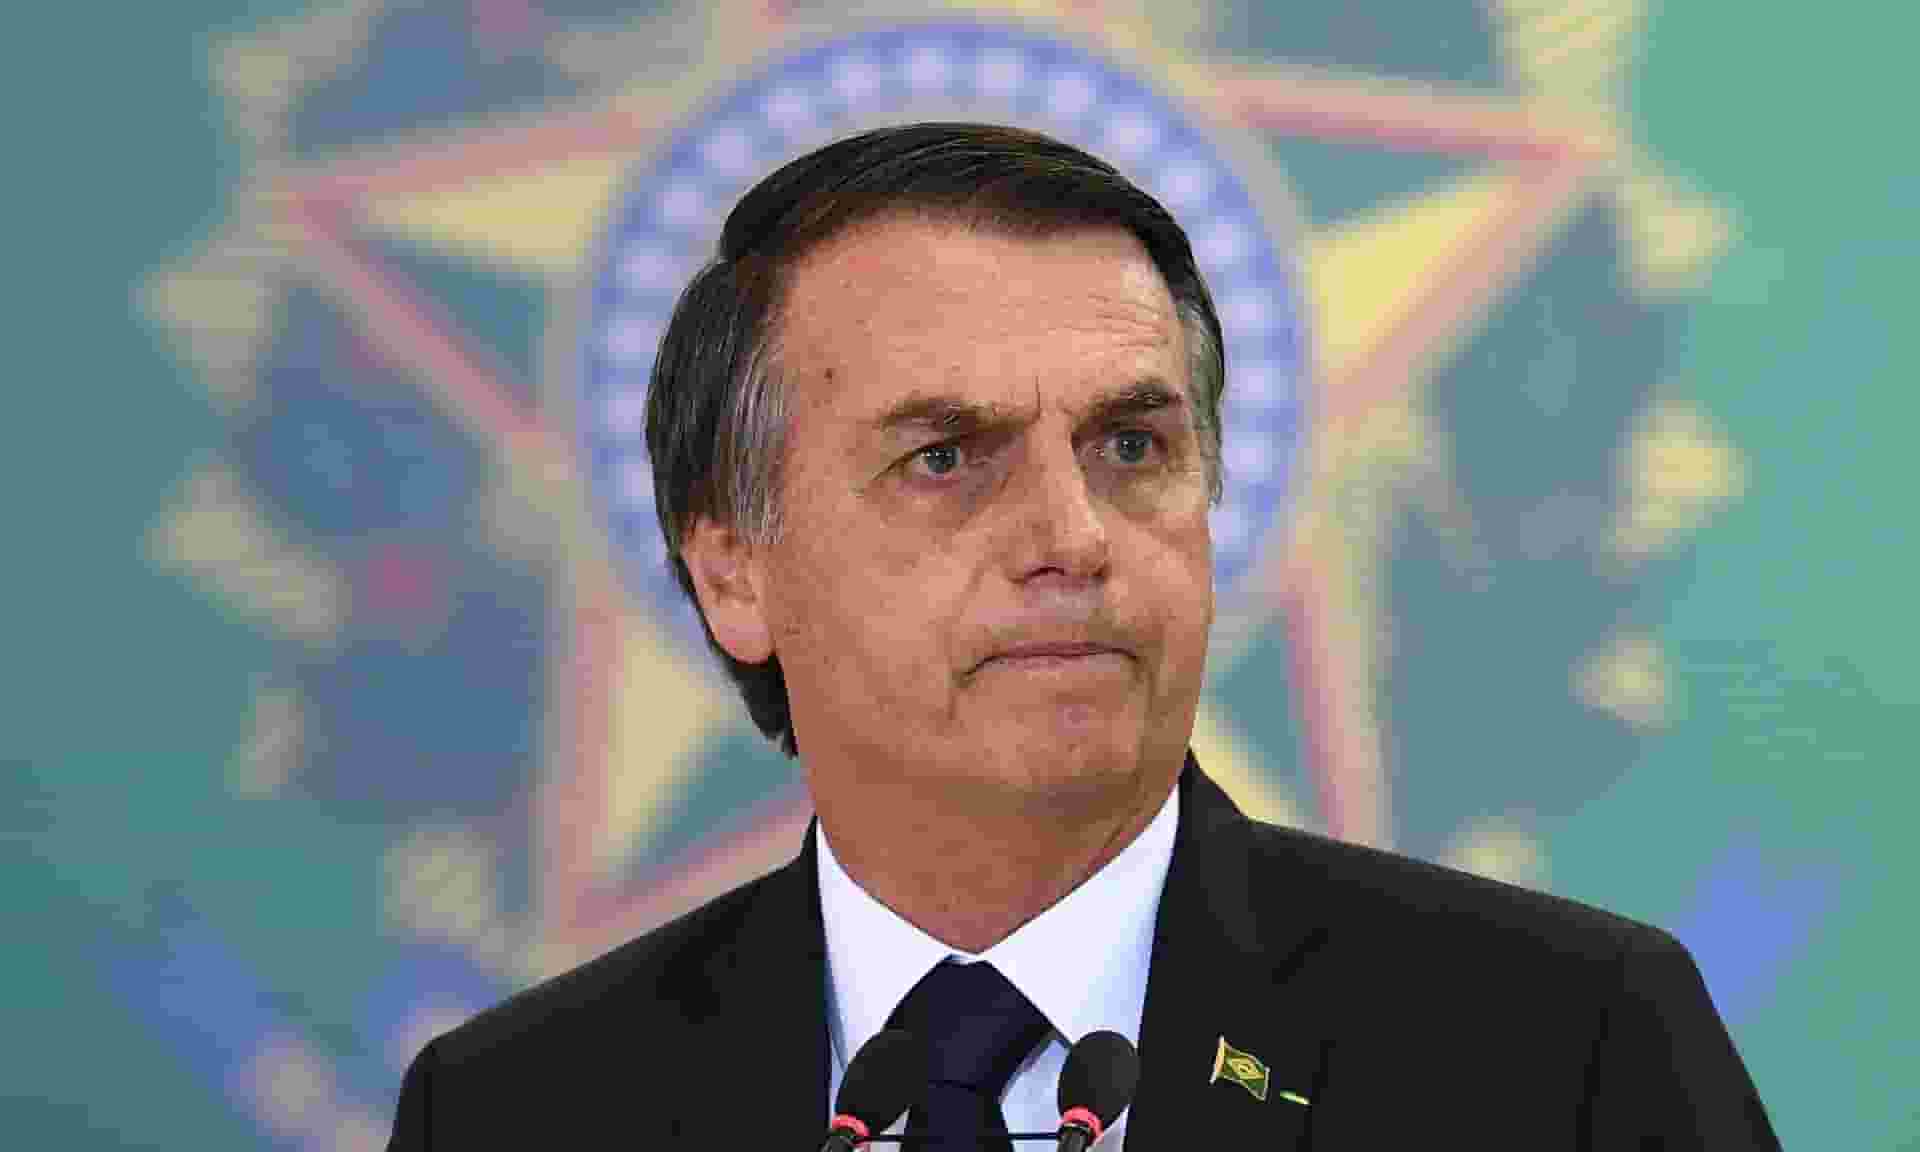 Jair Bolsonaro presidente